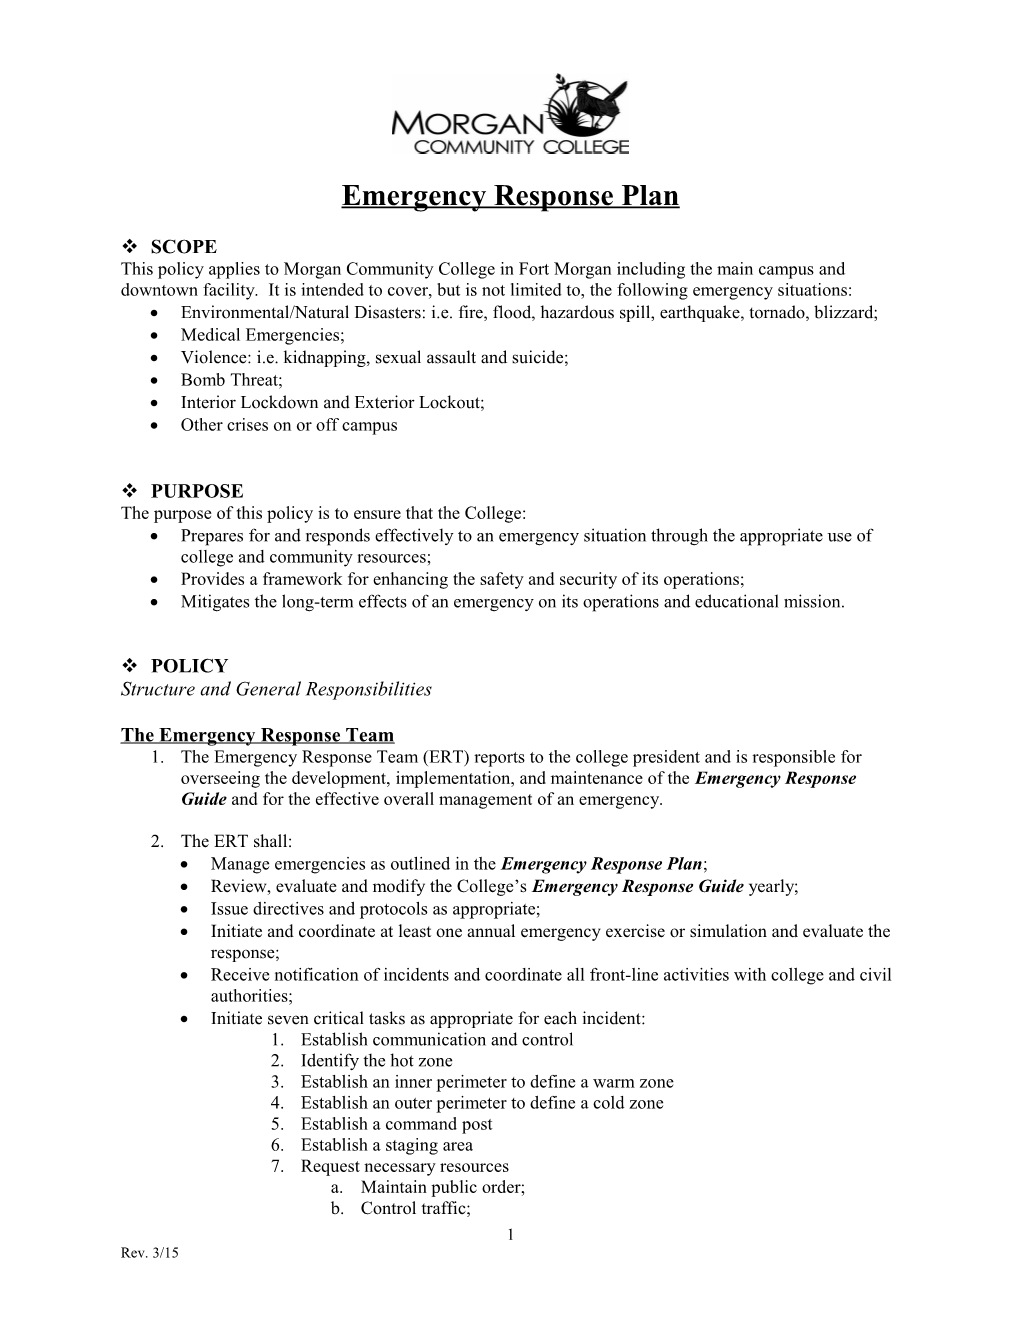 Emergency Response Plan s3